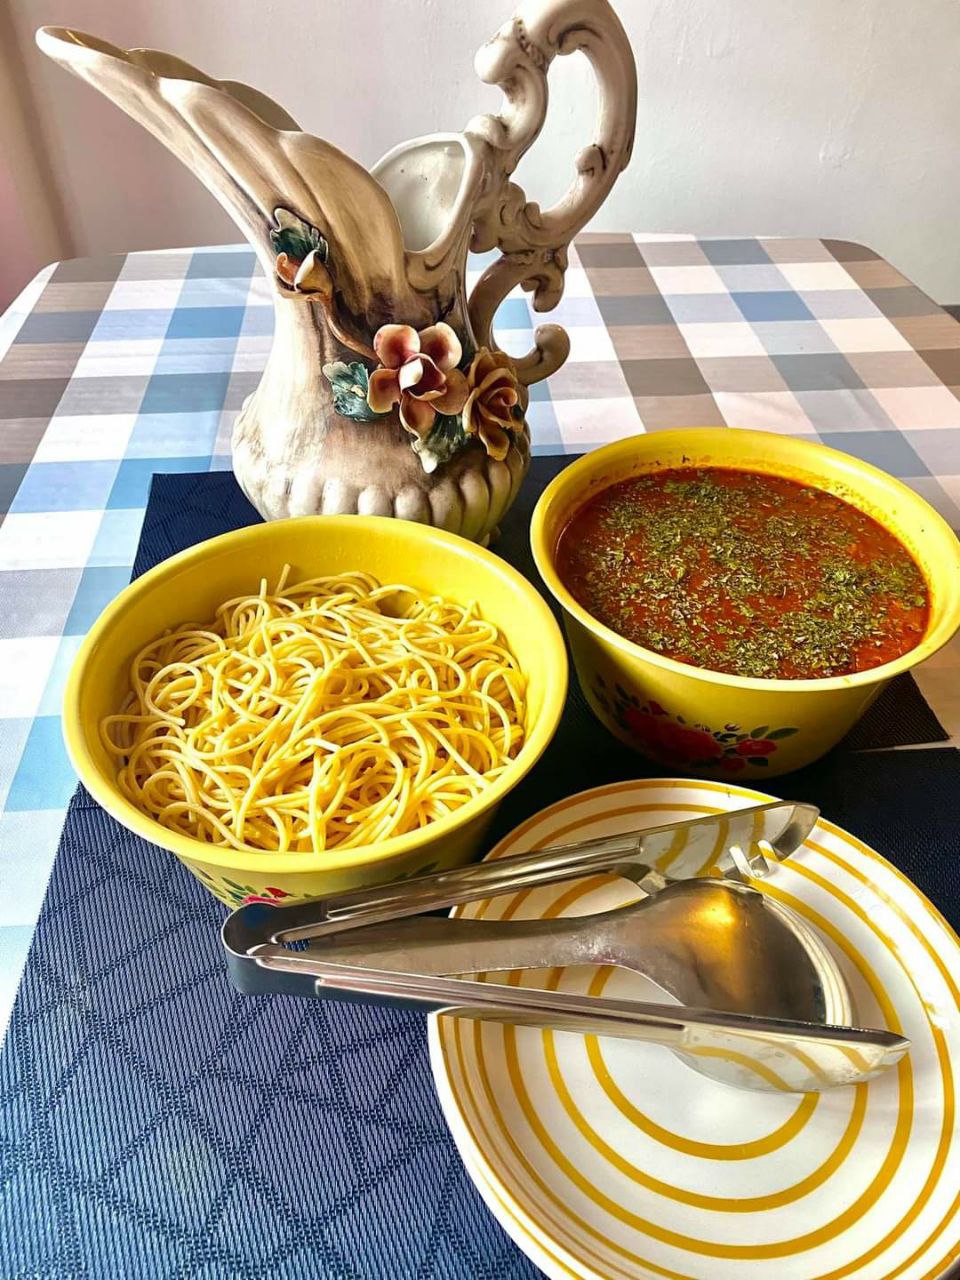 Resepi Spaghetti Bolognaise Masakan Itali Yang Sedap Dengan Sos Bolognaise Homemade Daily Masak